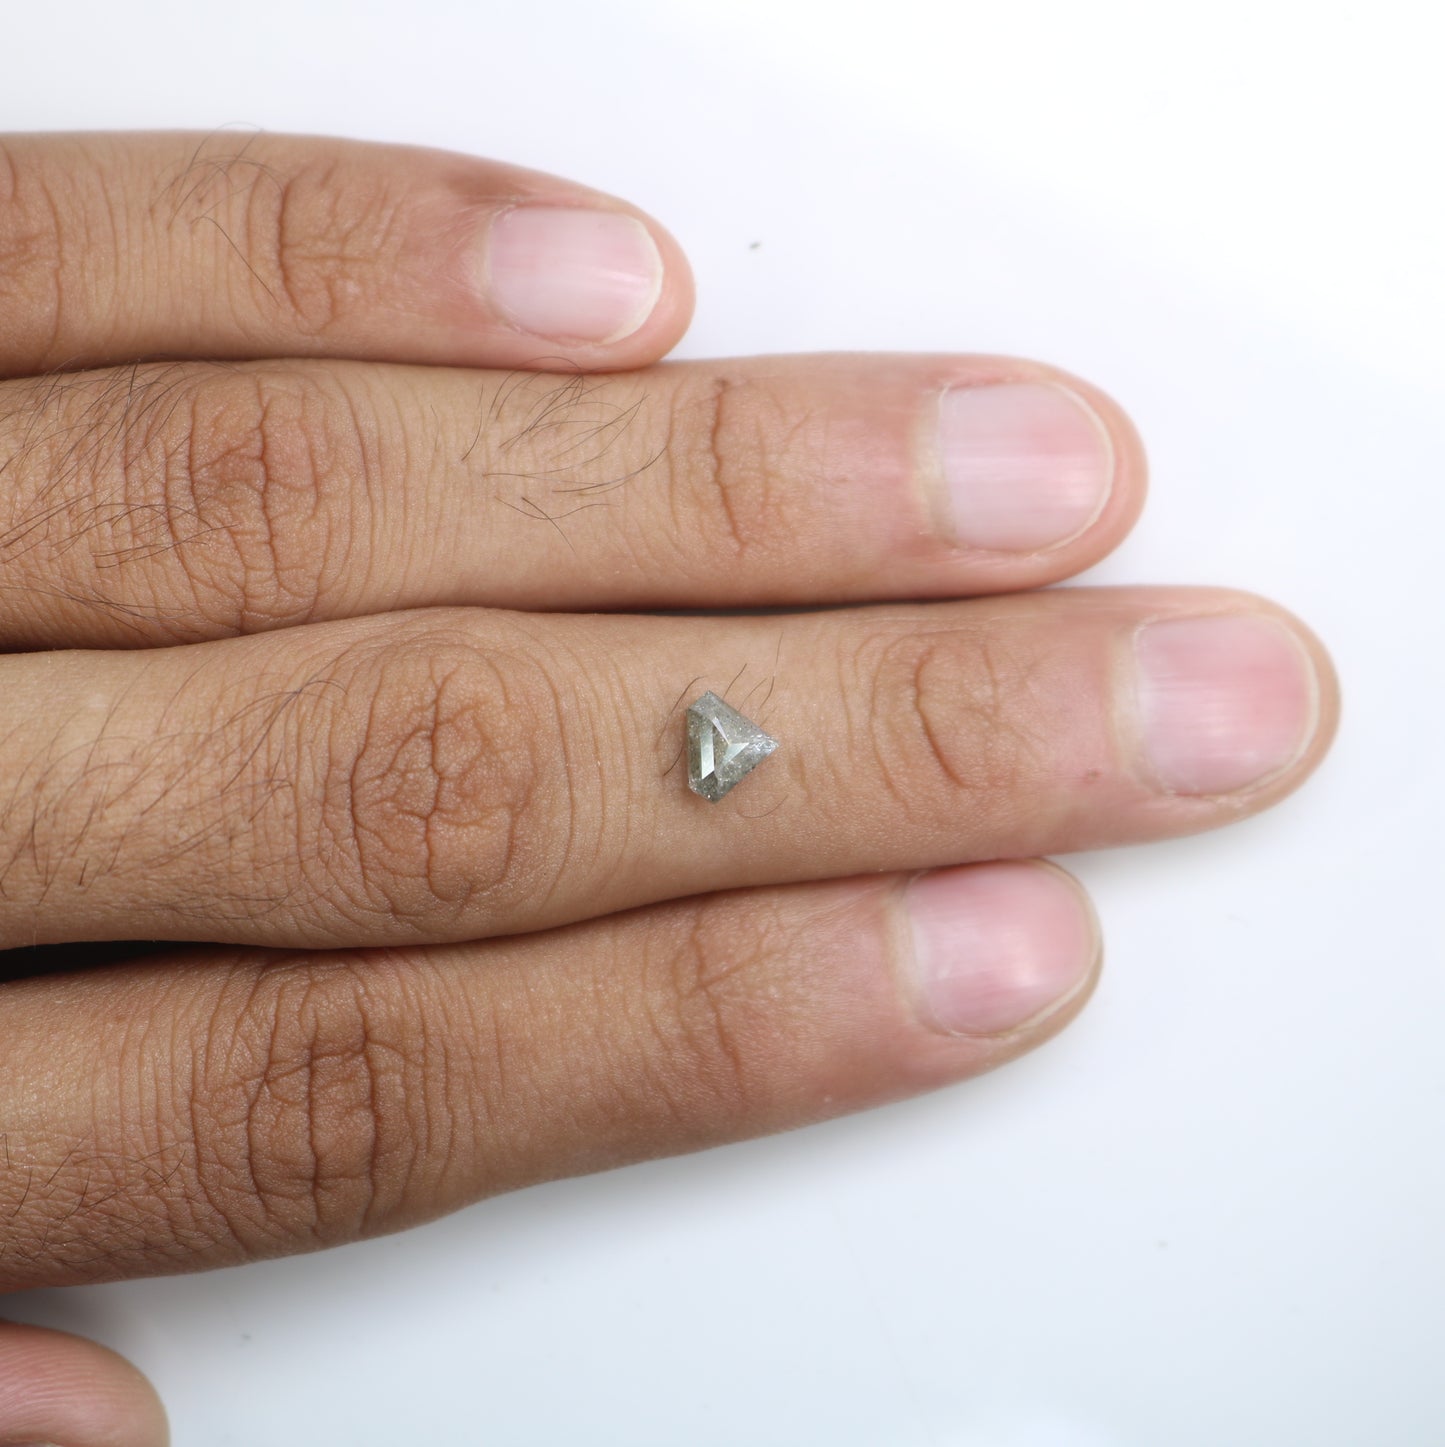 1.00 CT Diamond Shape Salt And Pepper Natural Diamond For Engagement Ring